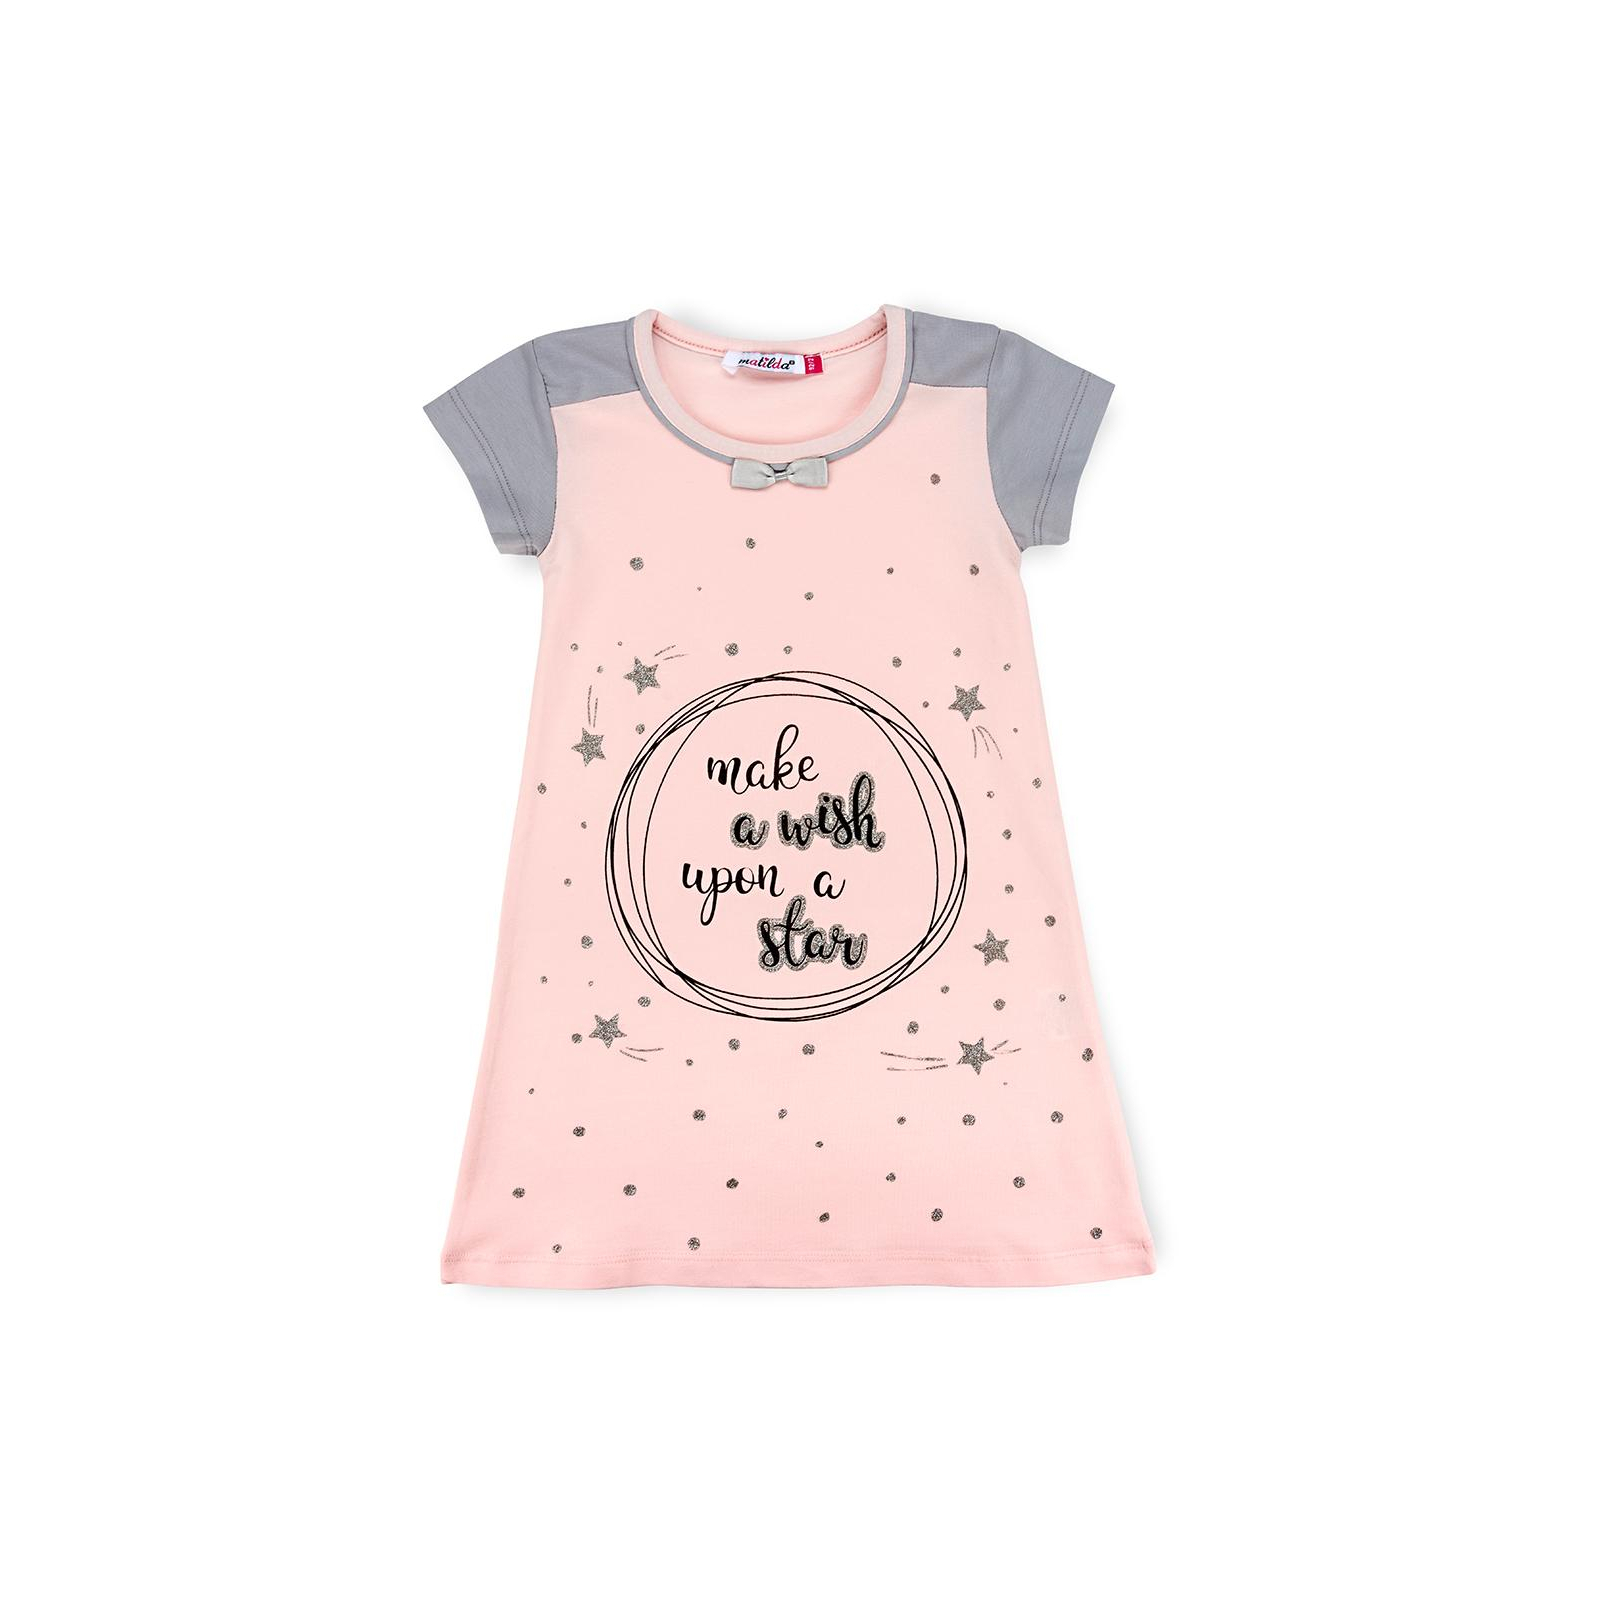 Піжама Matilda сорочка Із зірочкамі (7992-2-92G-pink)